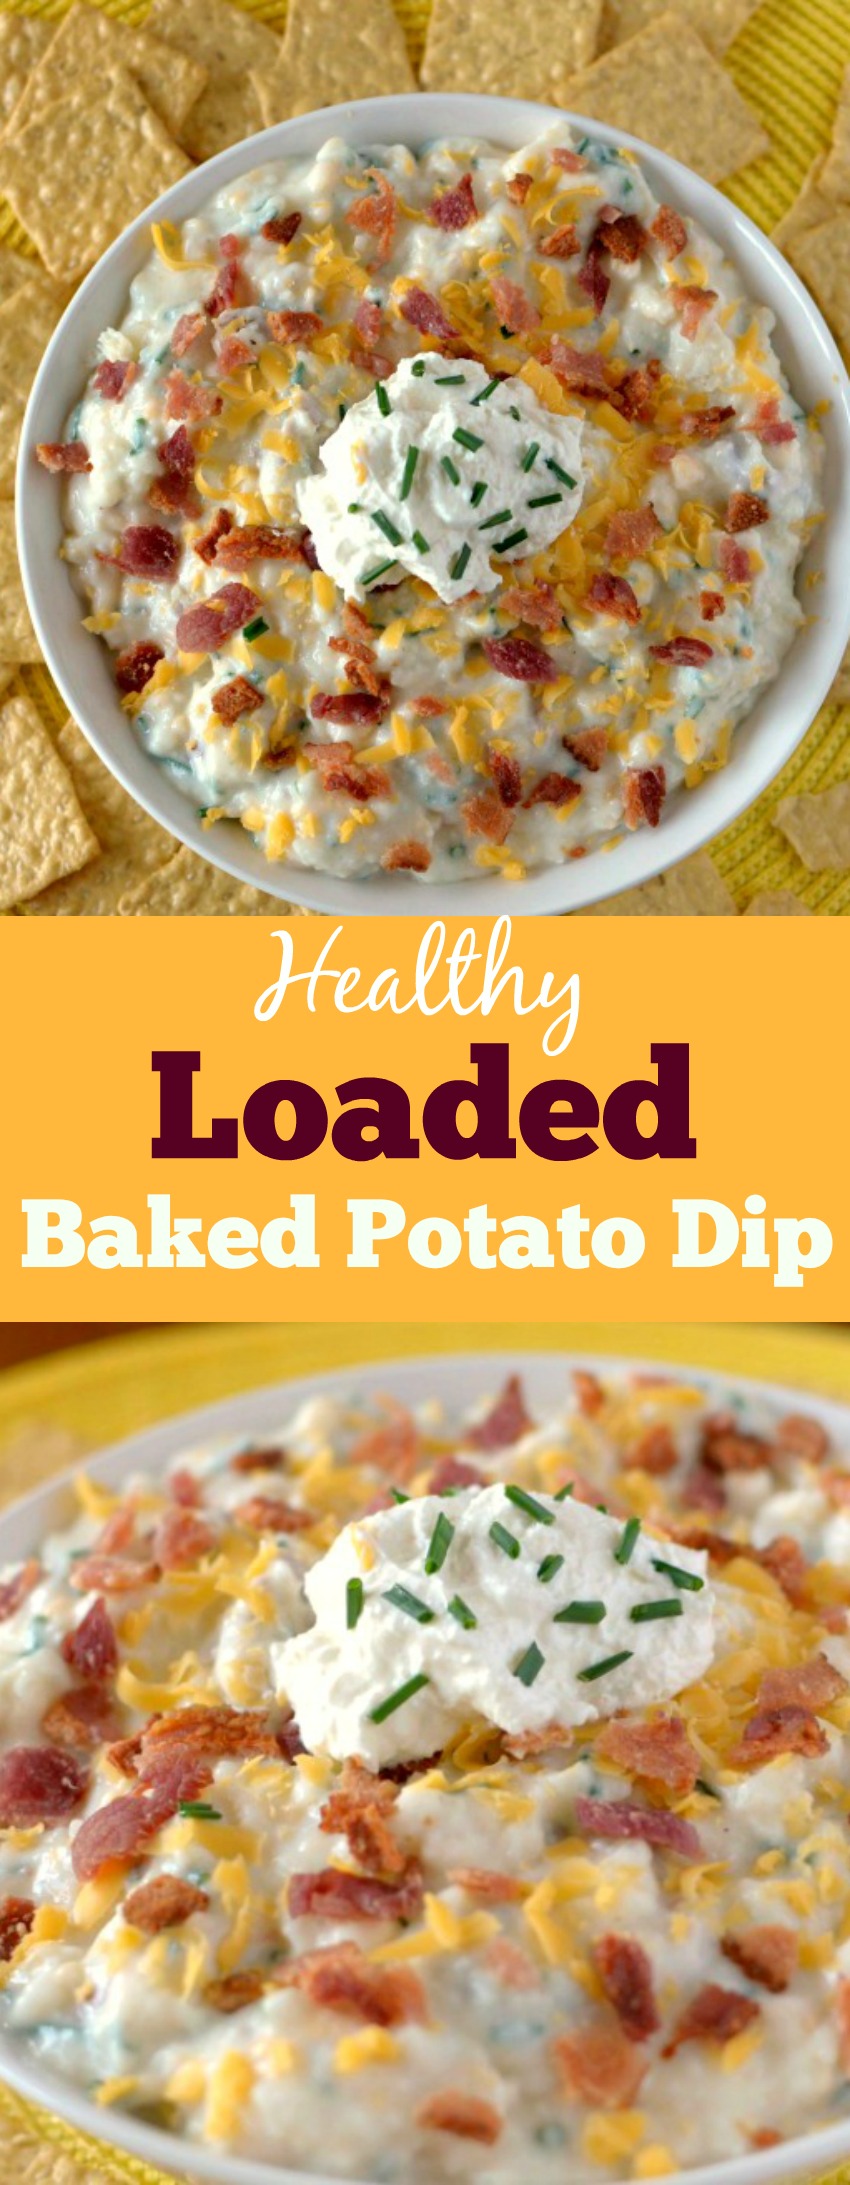 Healthier Loaded Baked Potato Dip {5 Minutes to Make!}